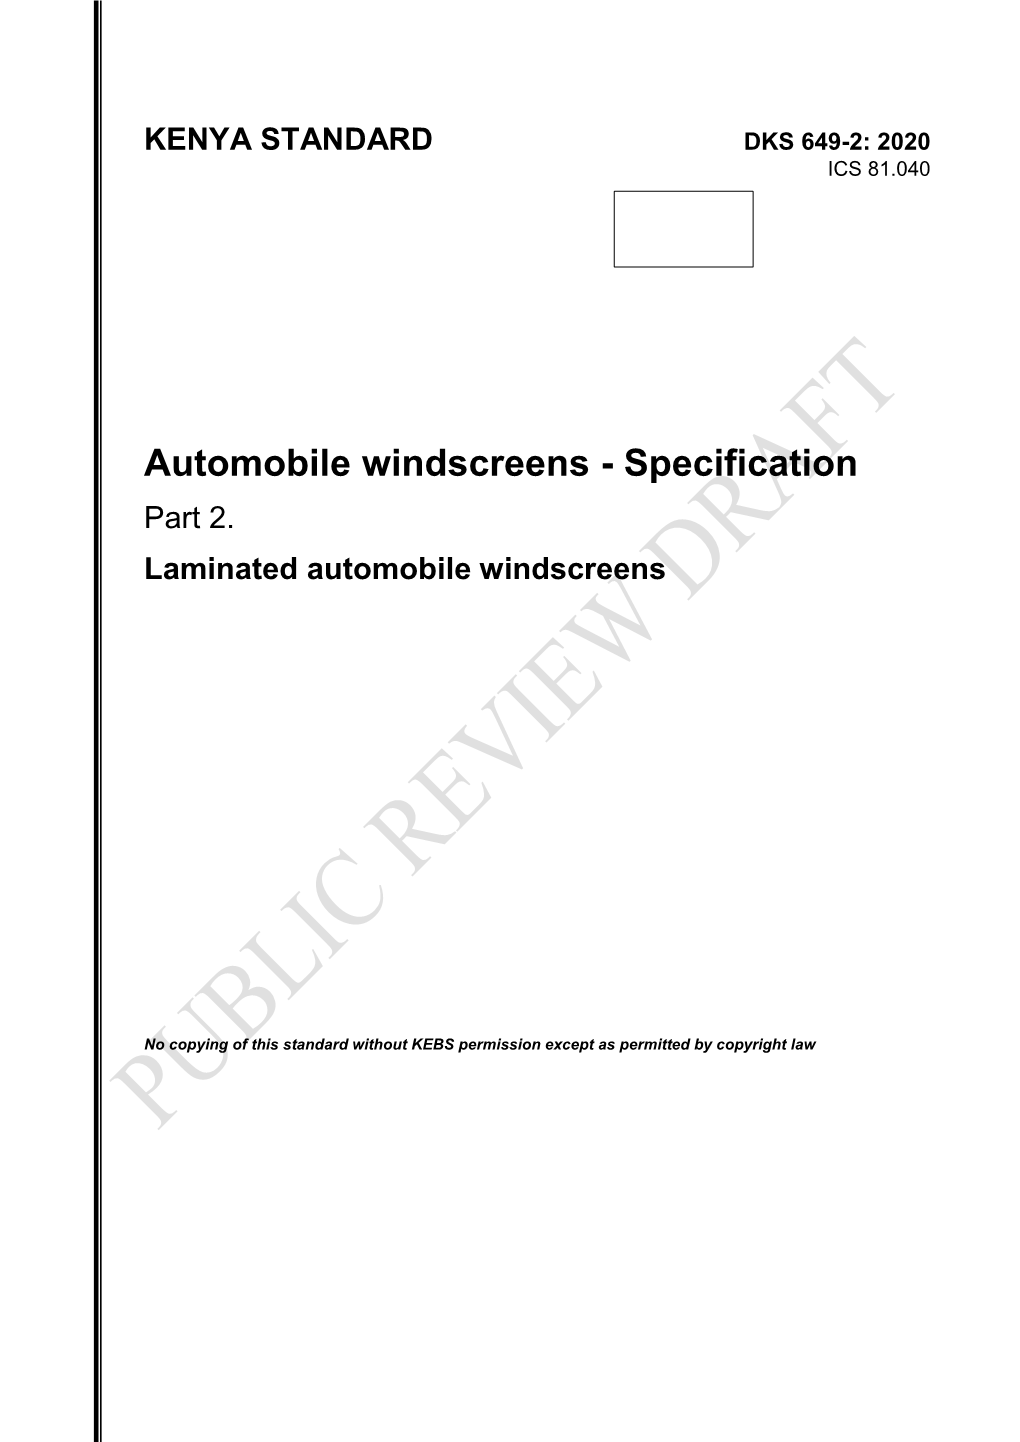 Automobile Windscreens - Specification